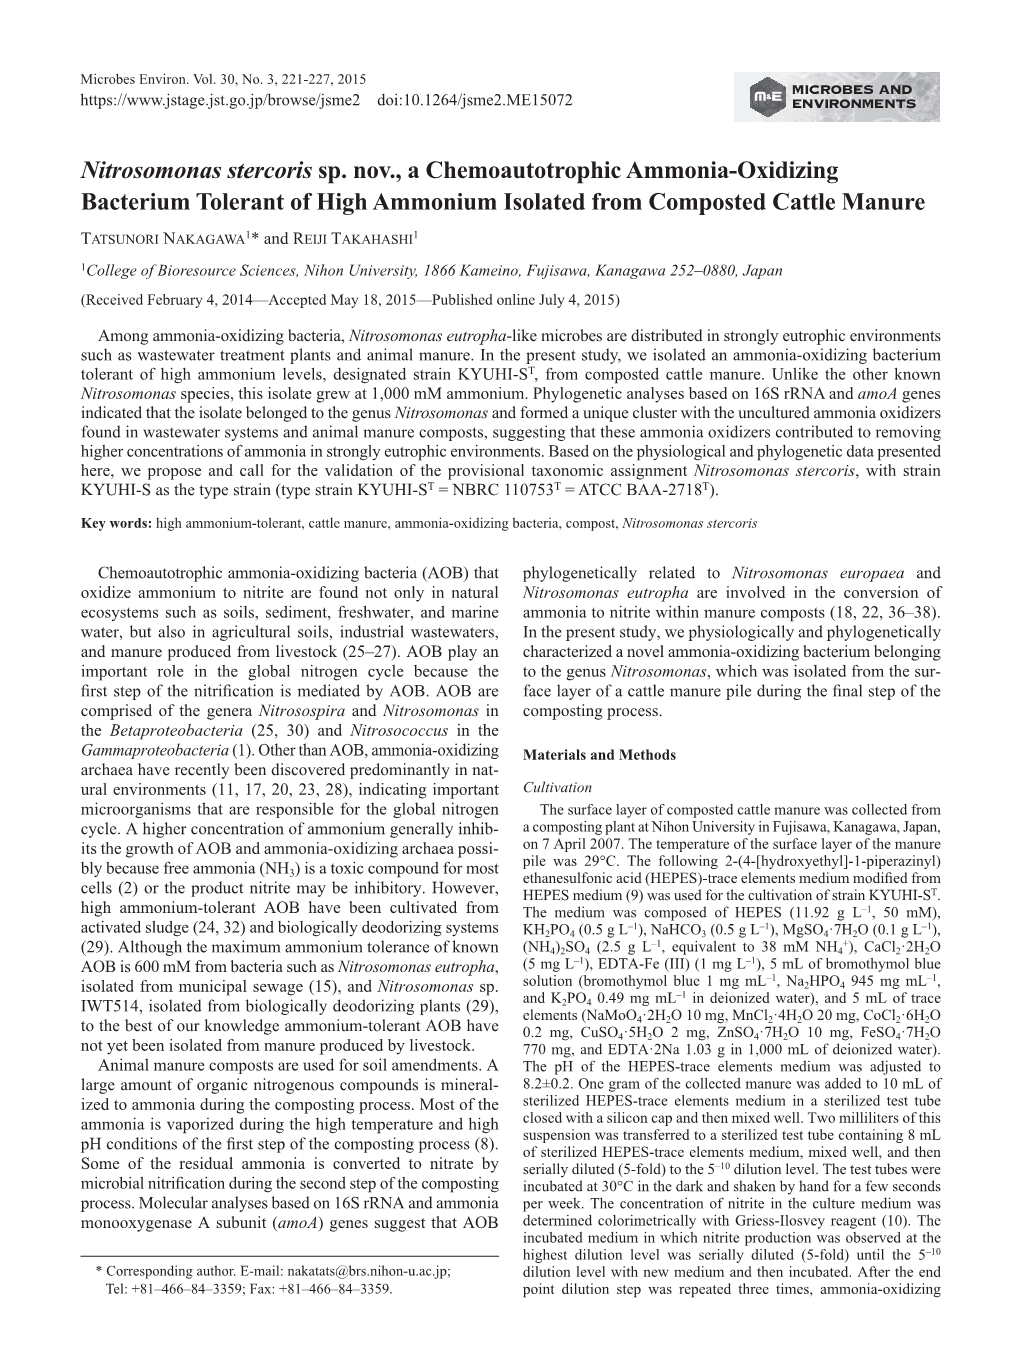 Nitrosomonas Stercoris Sp. Nov., a Chemoautotrophic Ammonia-Oxidizing Bacterium Tolerant of High Ammonium Isolated from Composted Cattle Manure